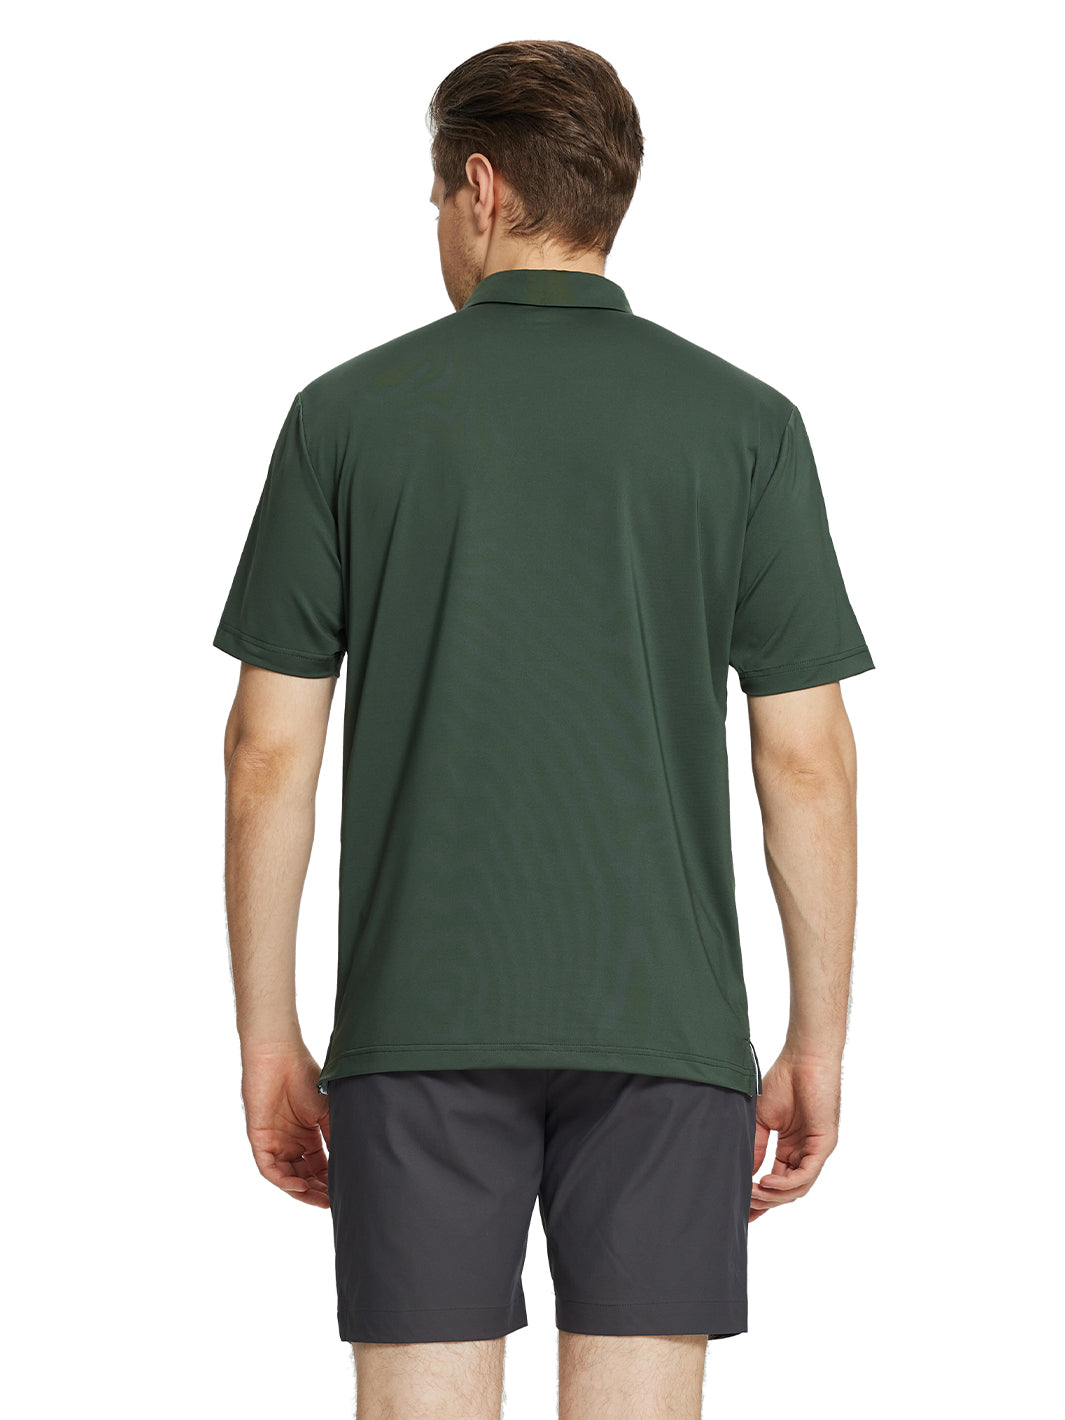 Men's Striped Print Golf Polo Shirts-Olive Green